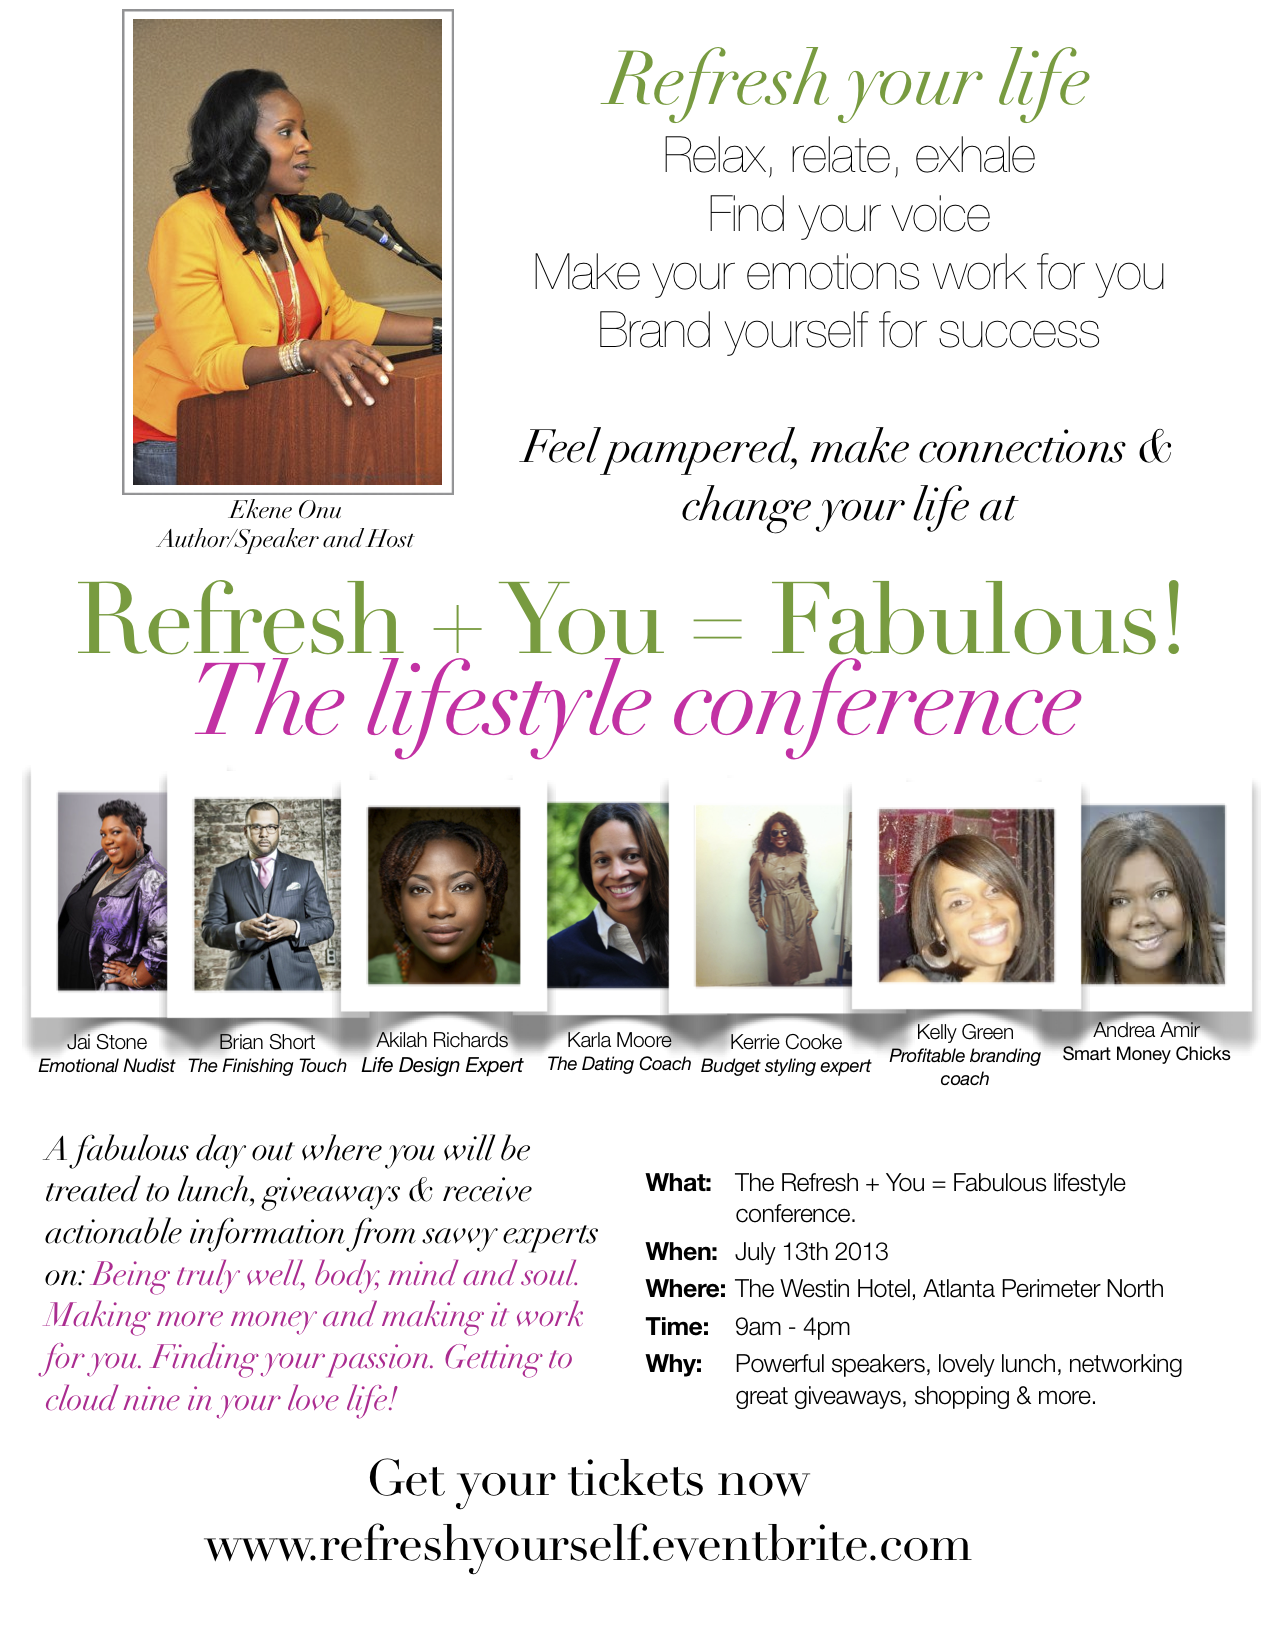 Refresh + You = Fabulous Event in Atlanta